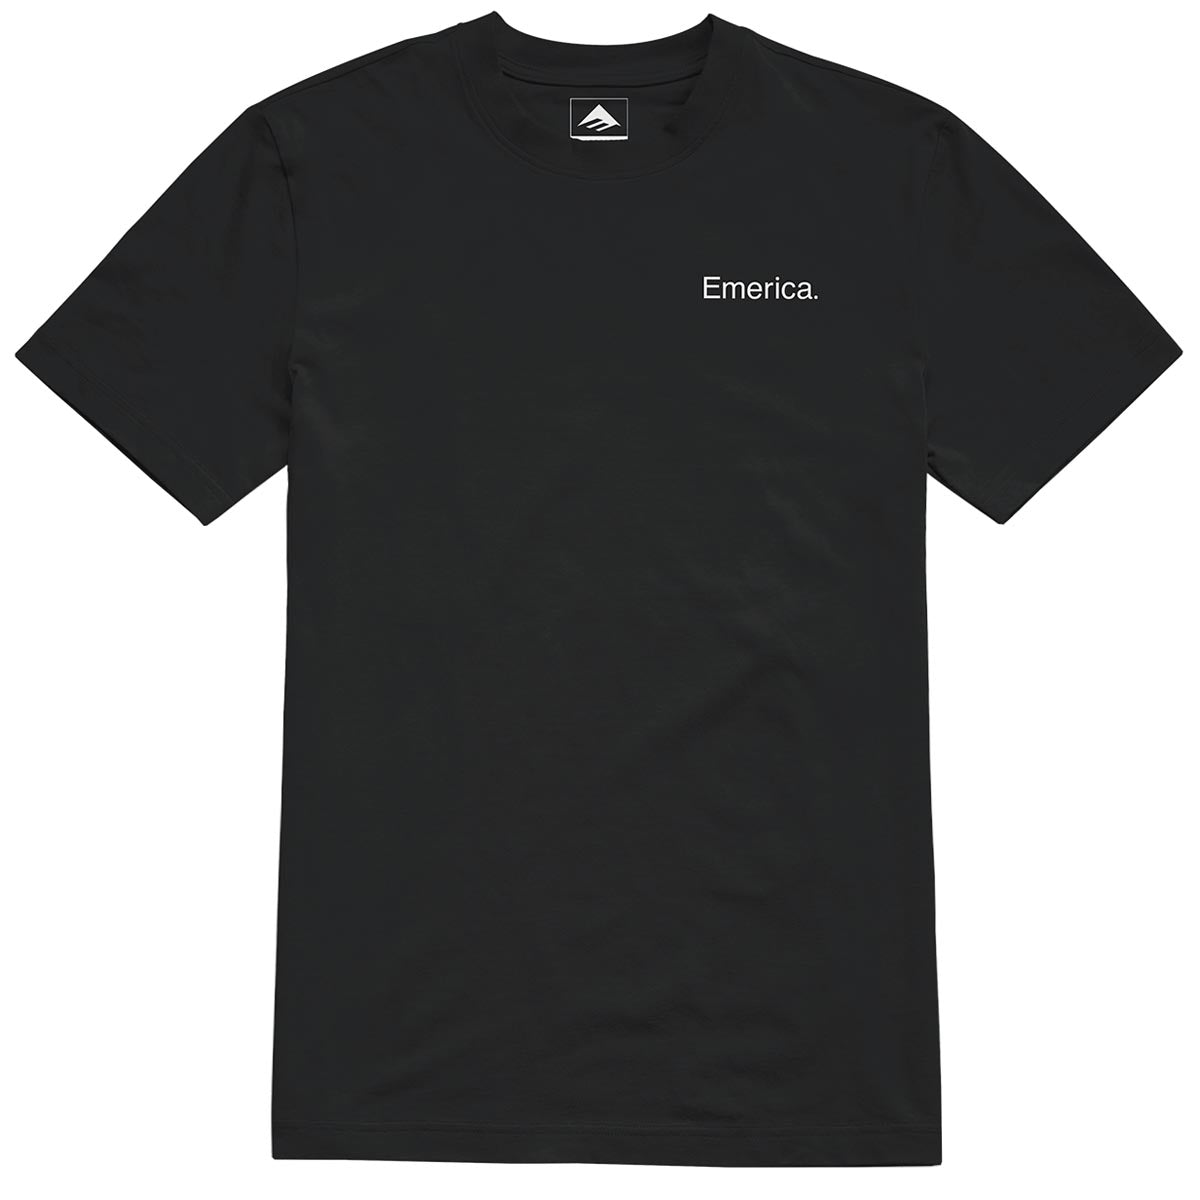 Emerica Lockup T-Shirt - Black image 1